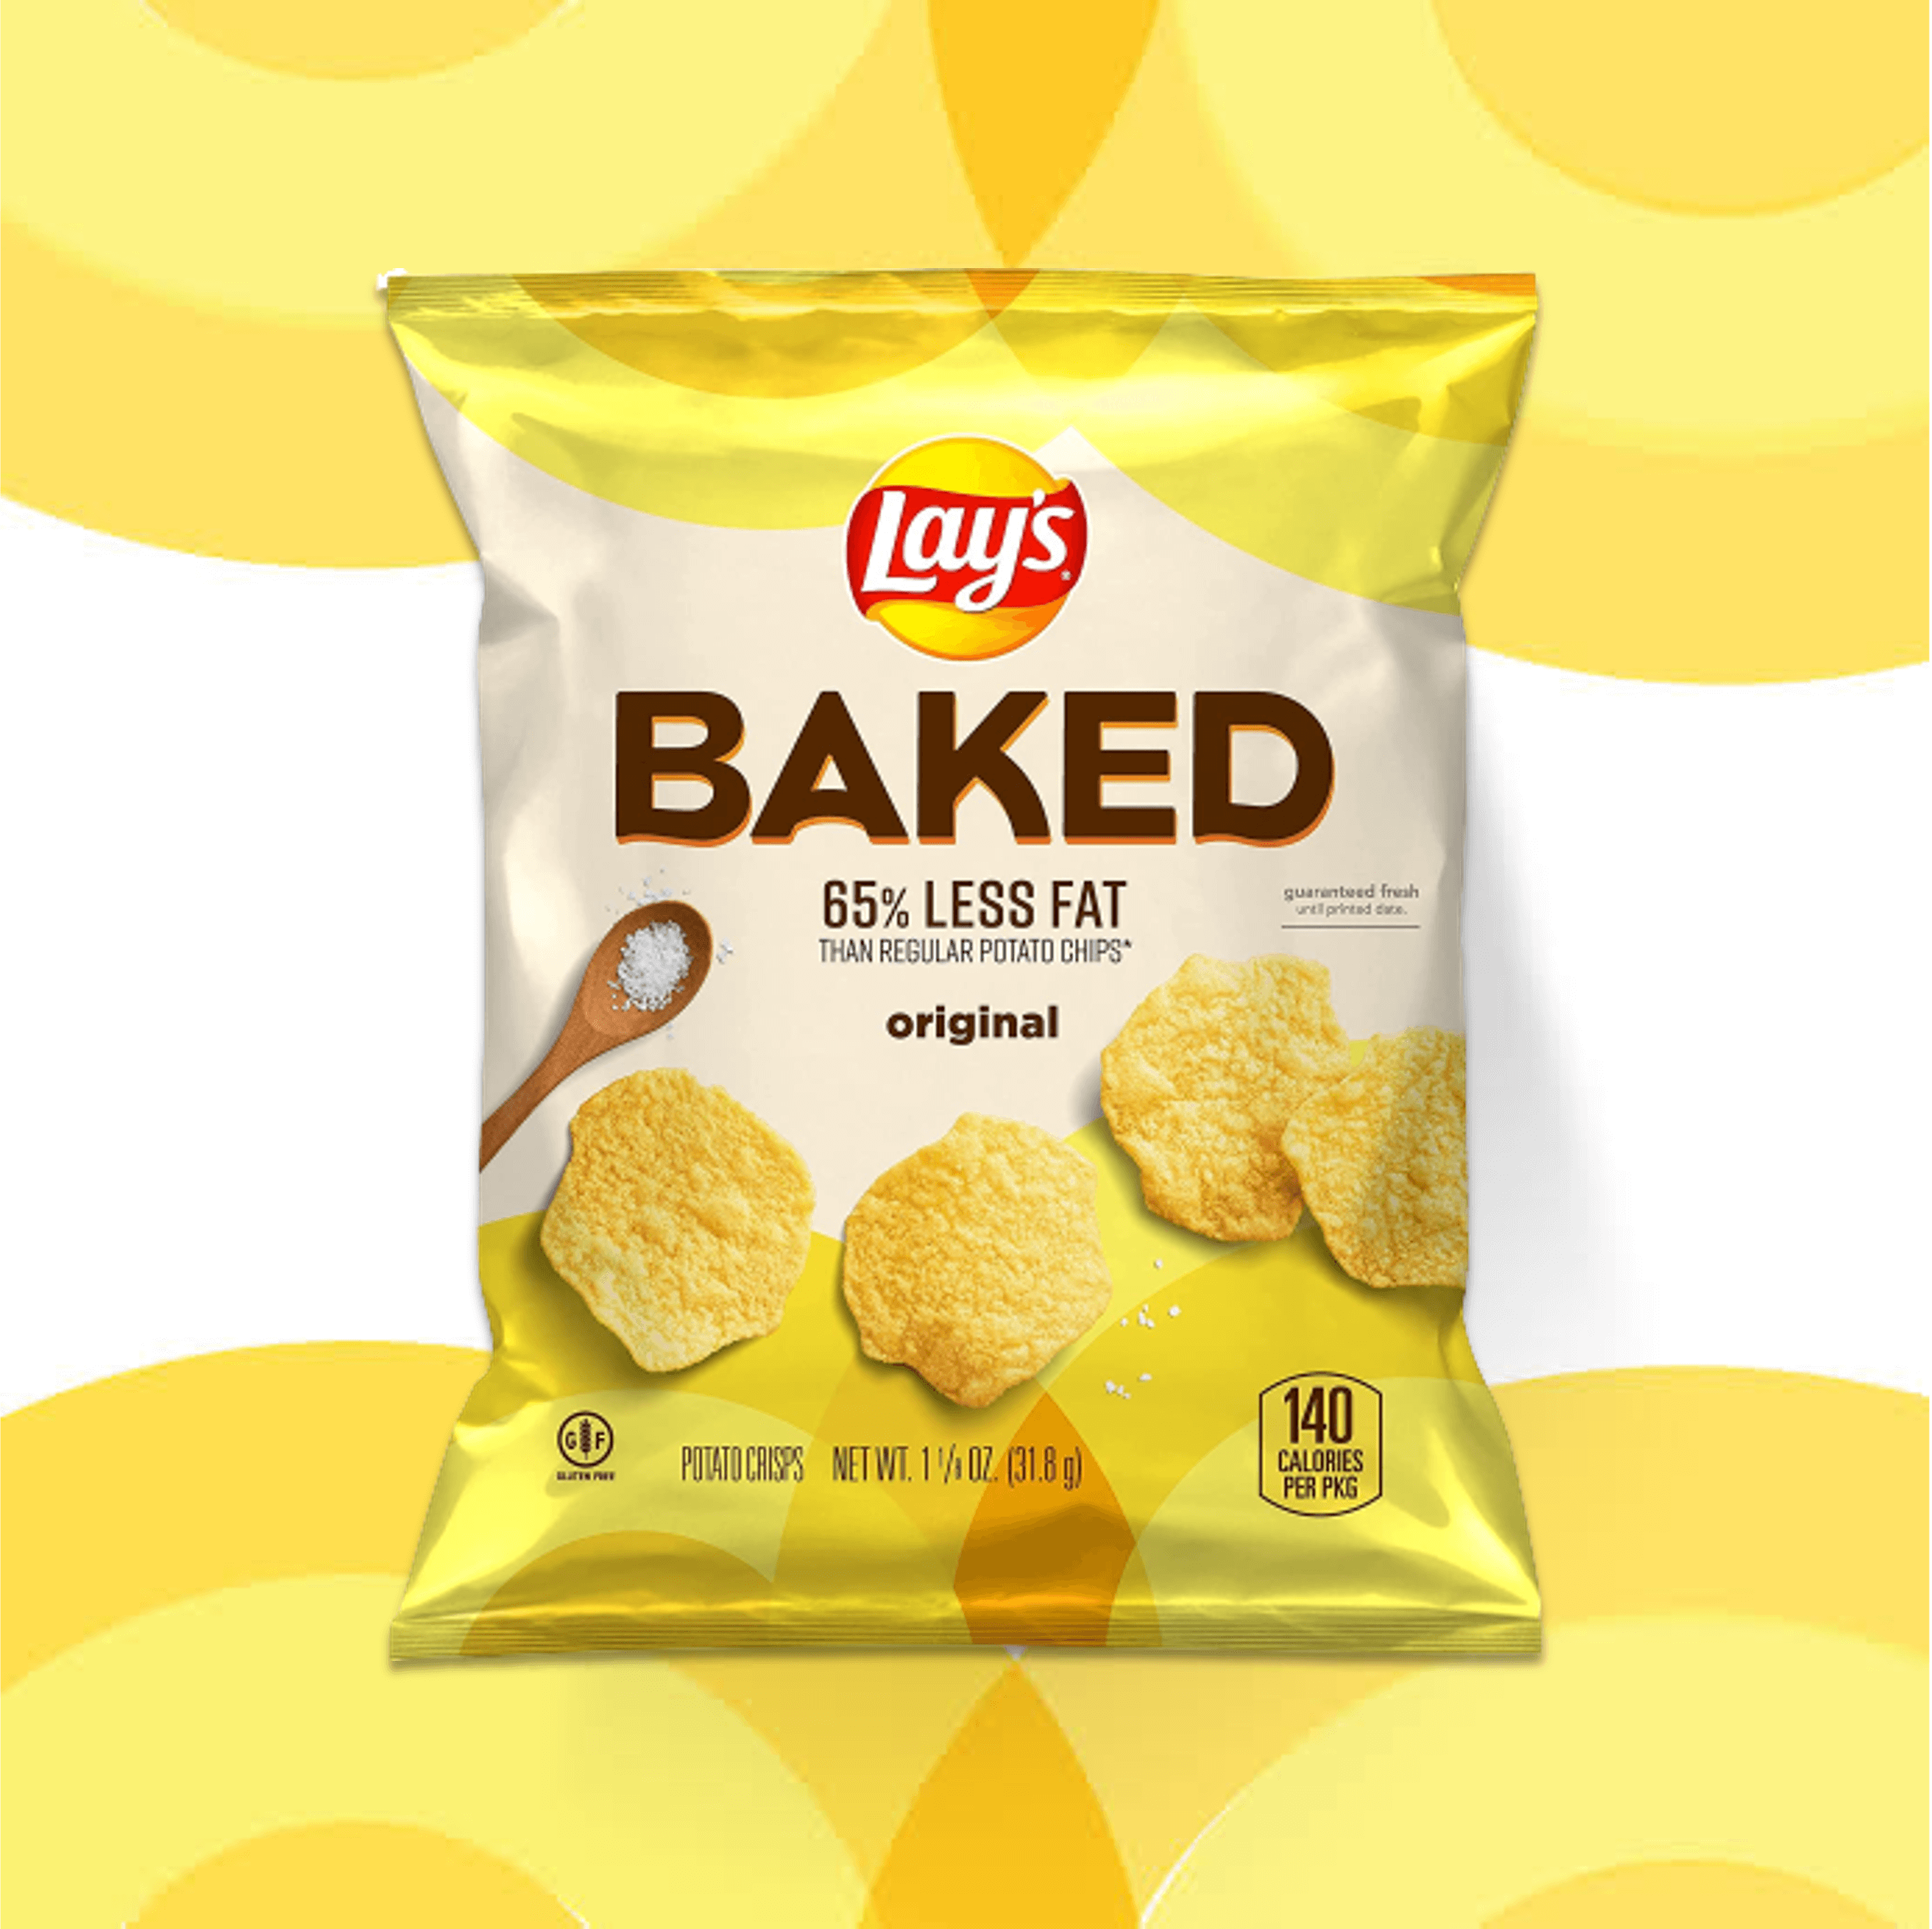 Lays® Oven Baked Original Potato Crisps 2.5 oz. Bag, Potato